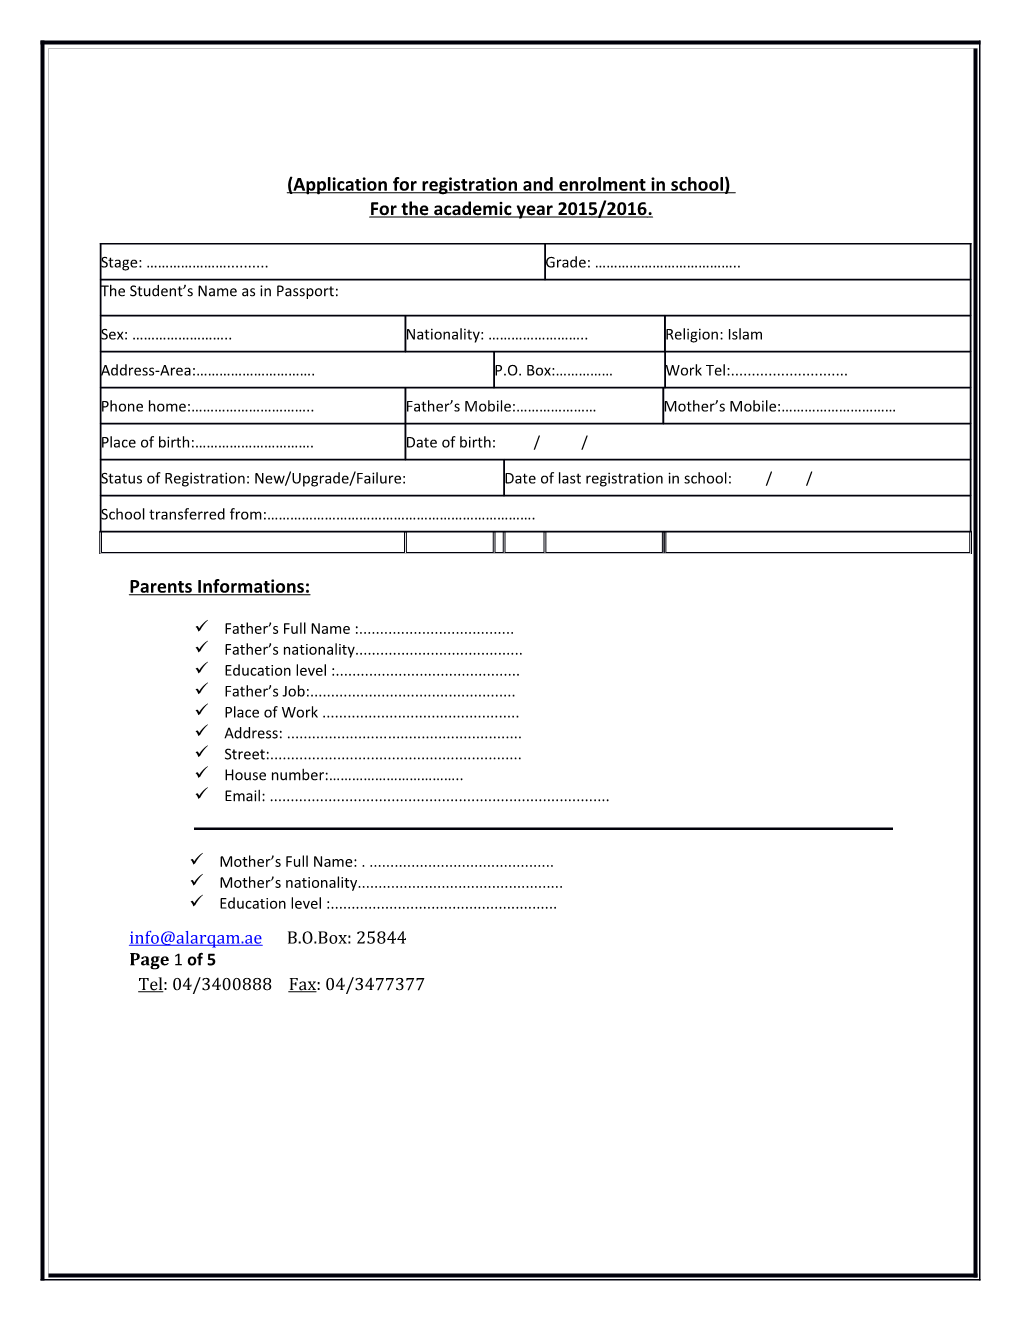 Application for Registration and Enrolment in School